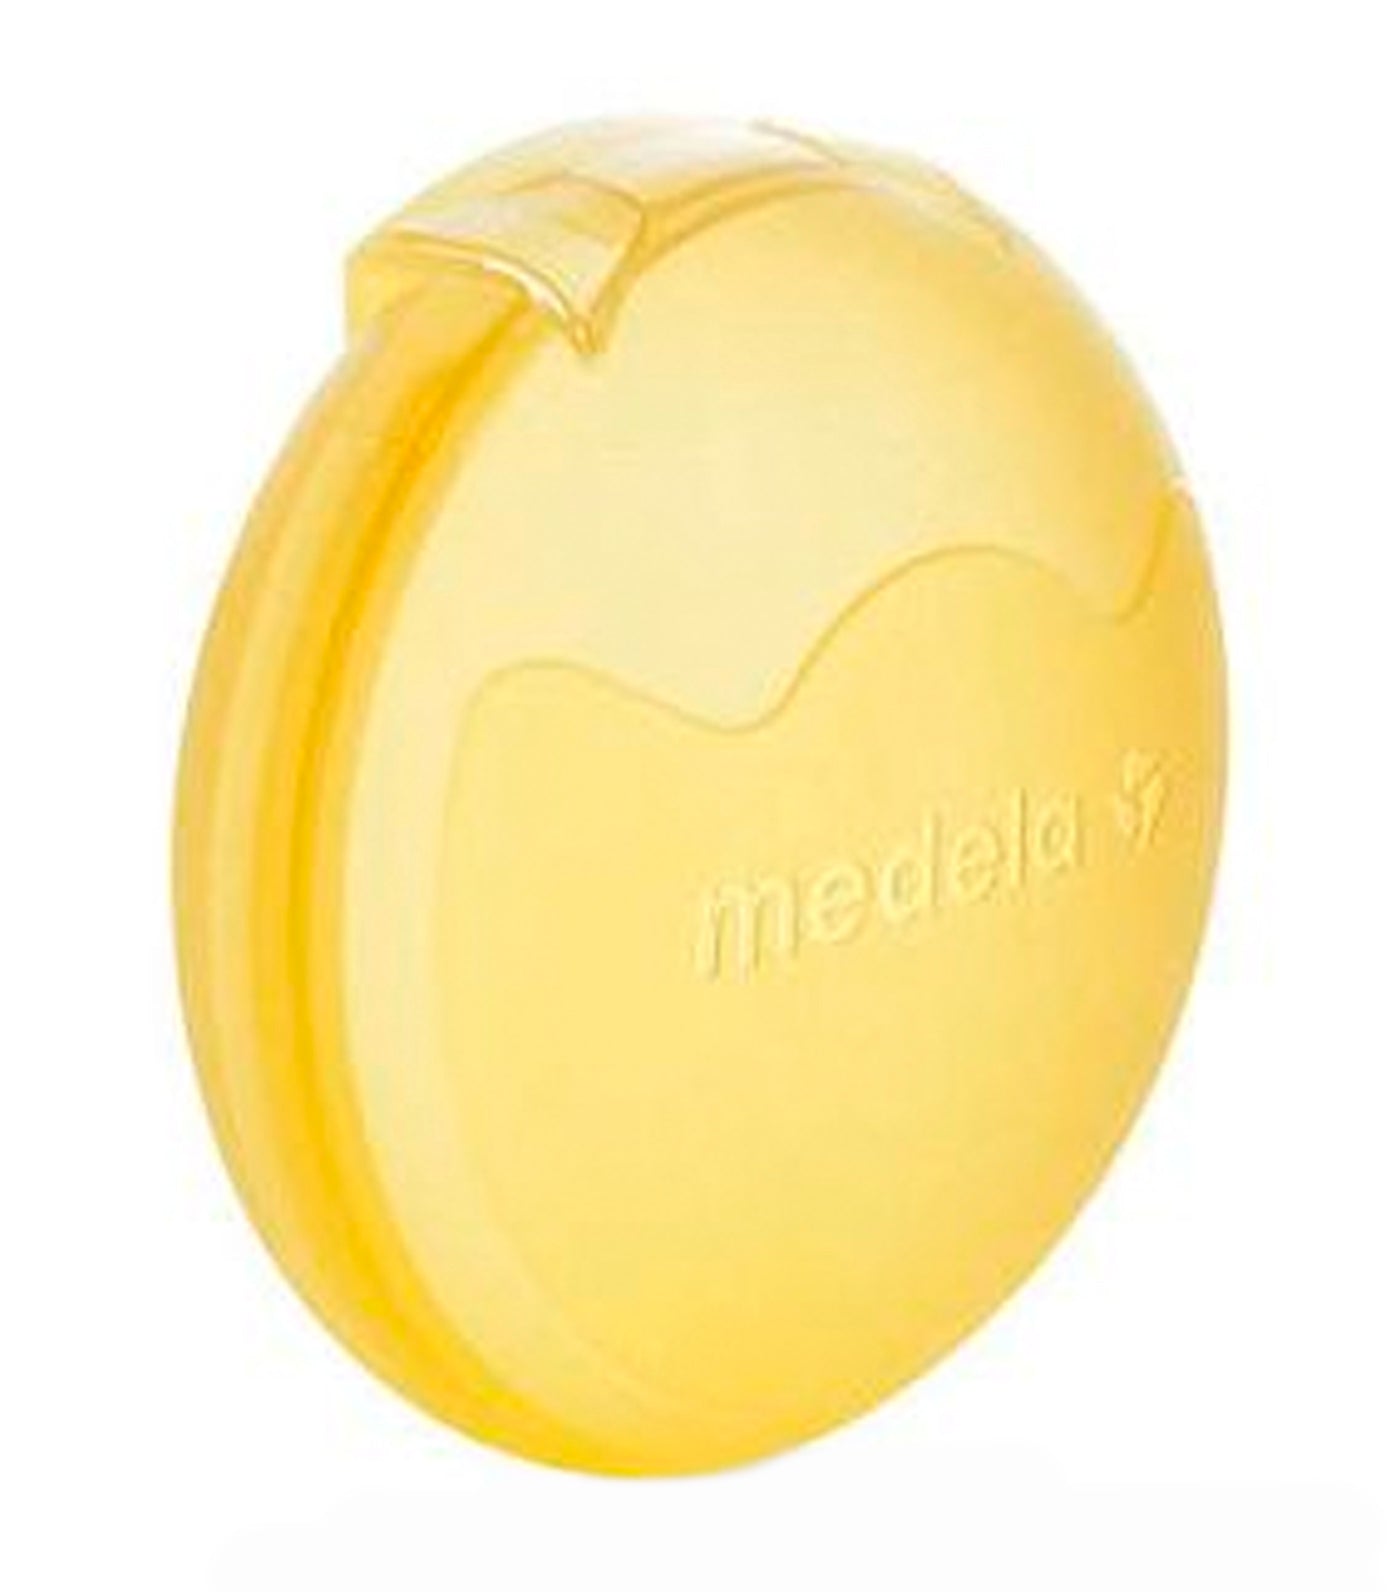 Medium Nipple Shields 21mm